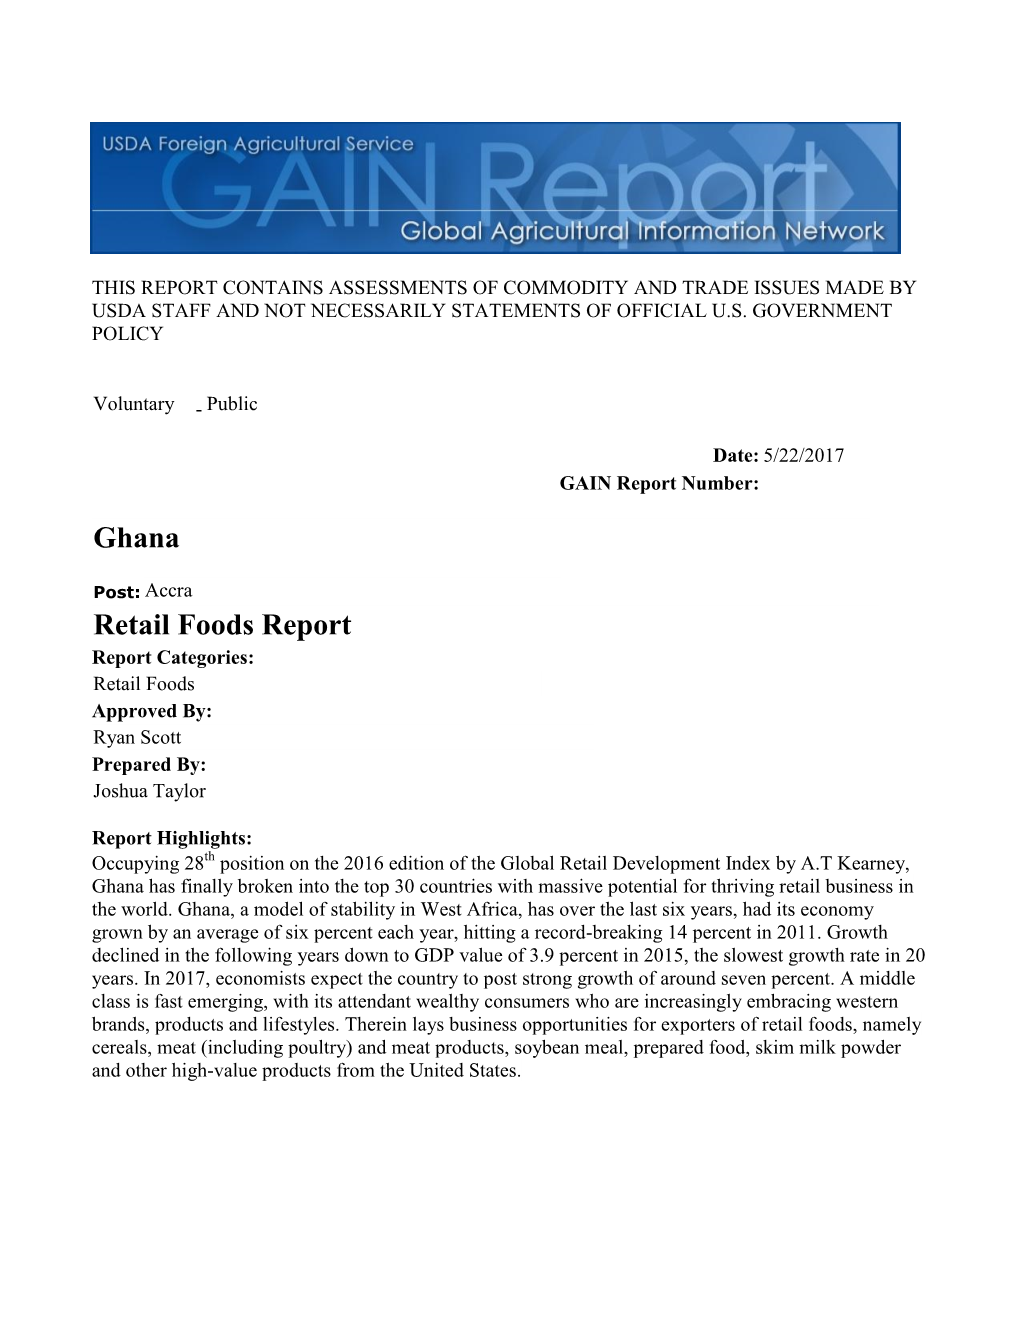 Ghana: Retail Foods Report